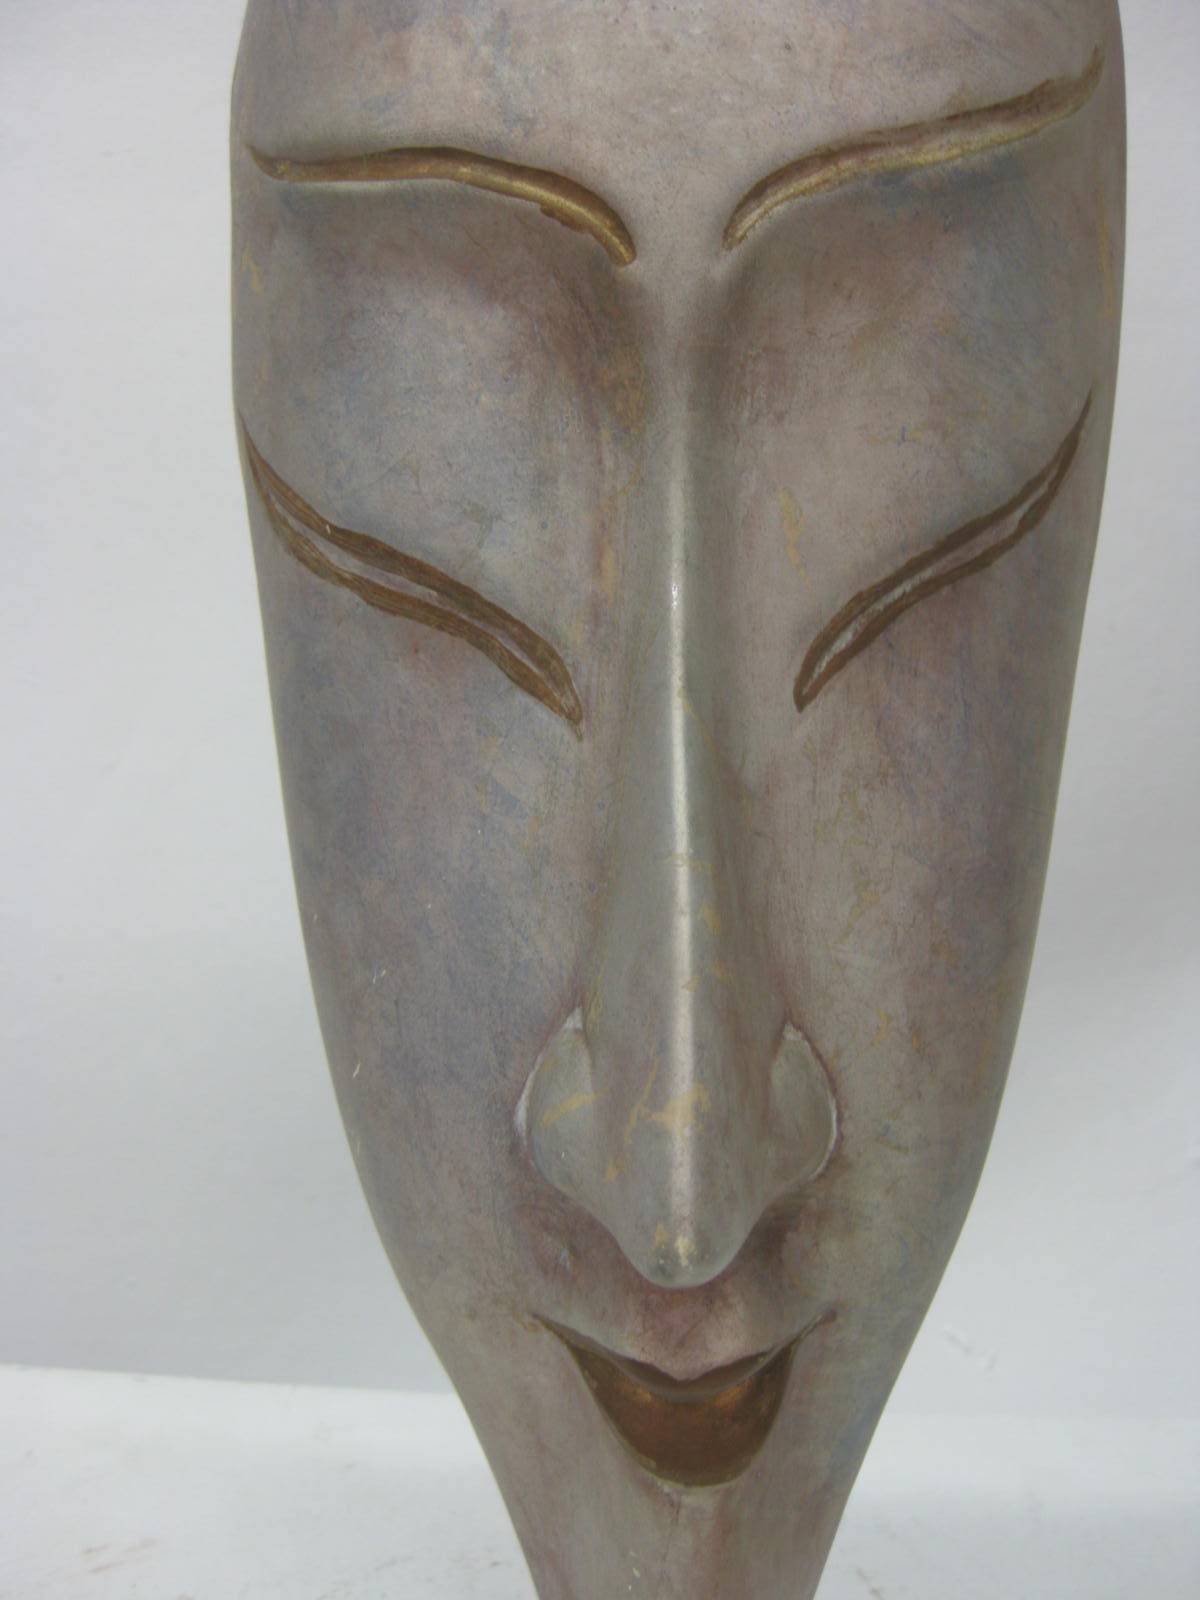 Ceramic Silver Glazed Mask